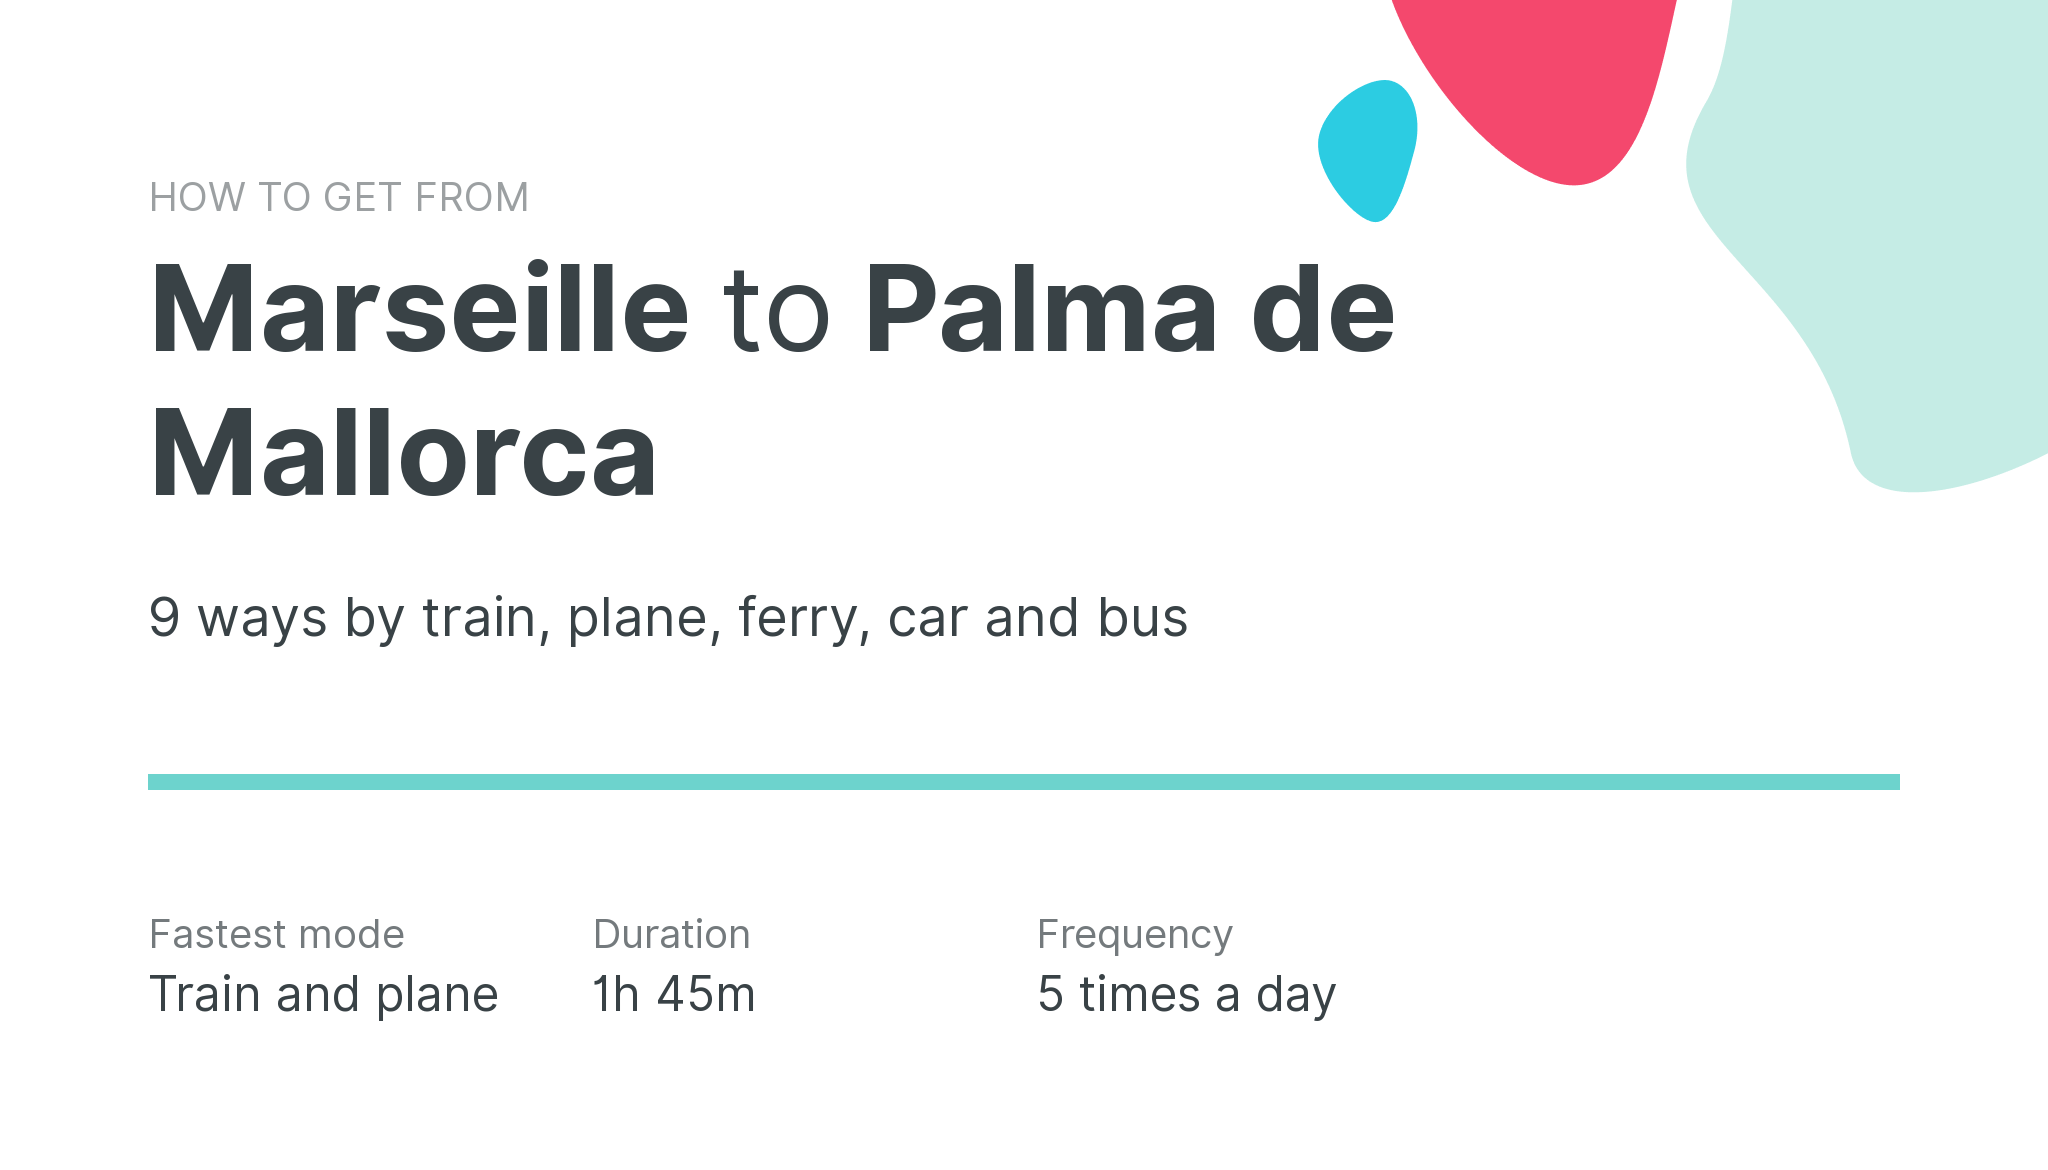 How do I get from Marseille to Palma de Mallorca